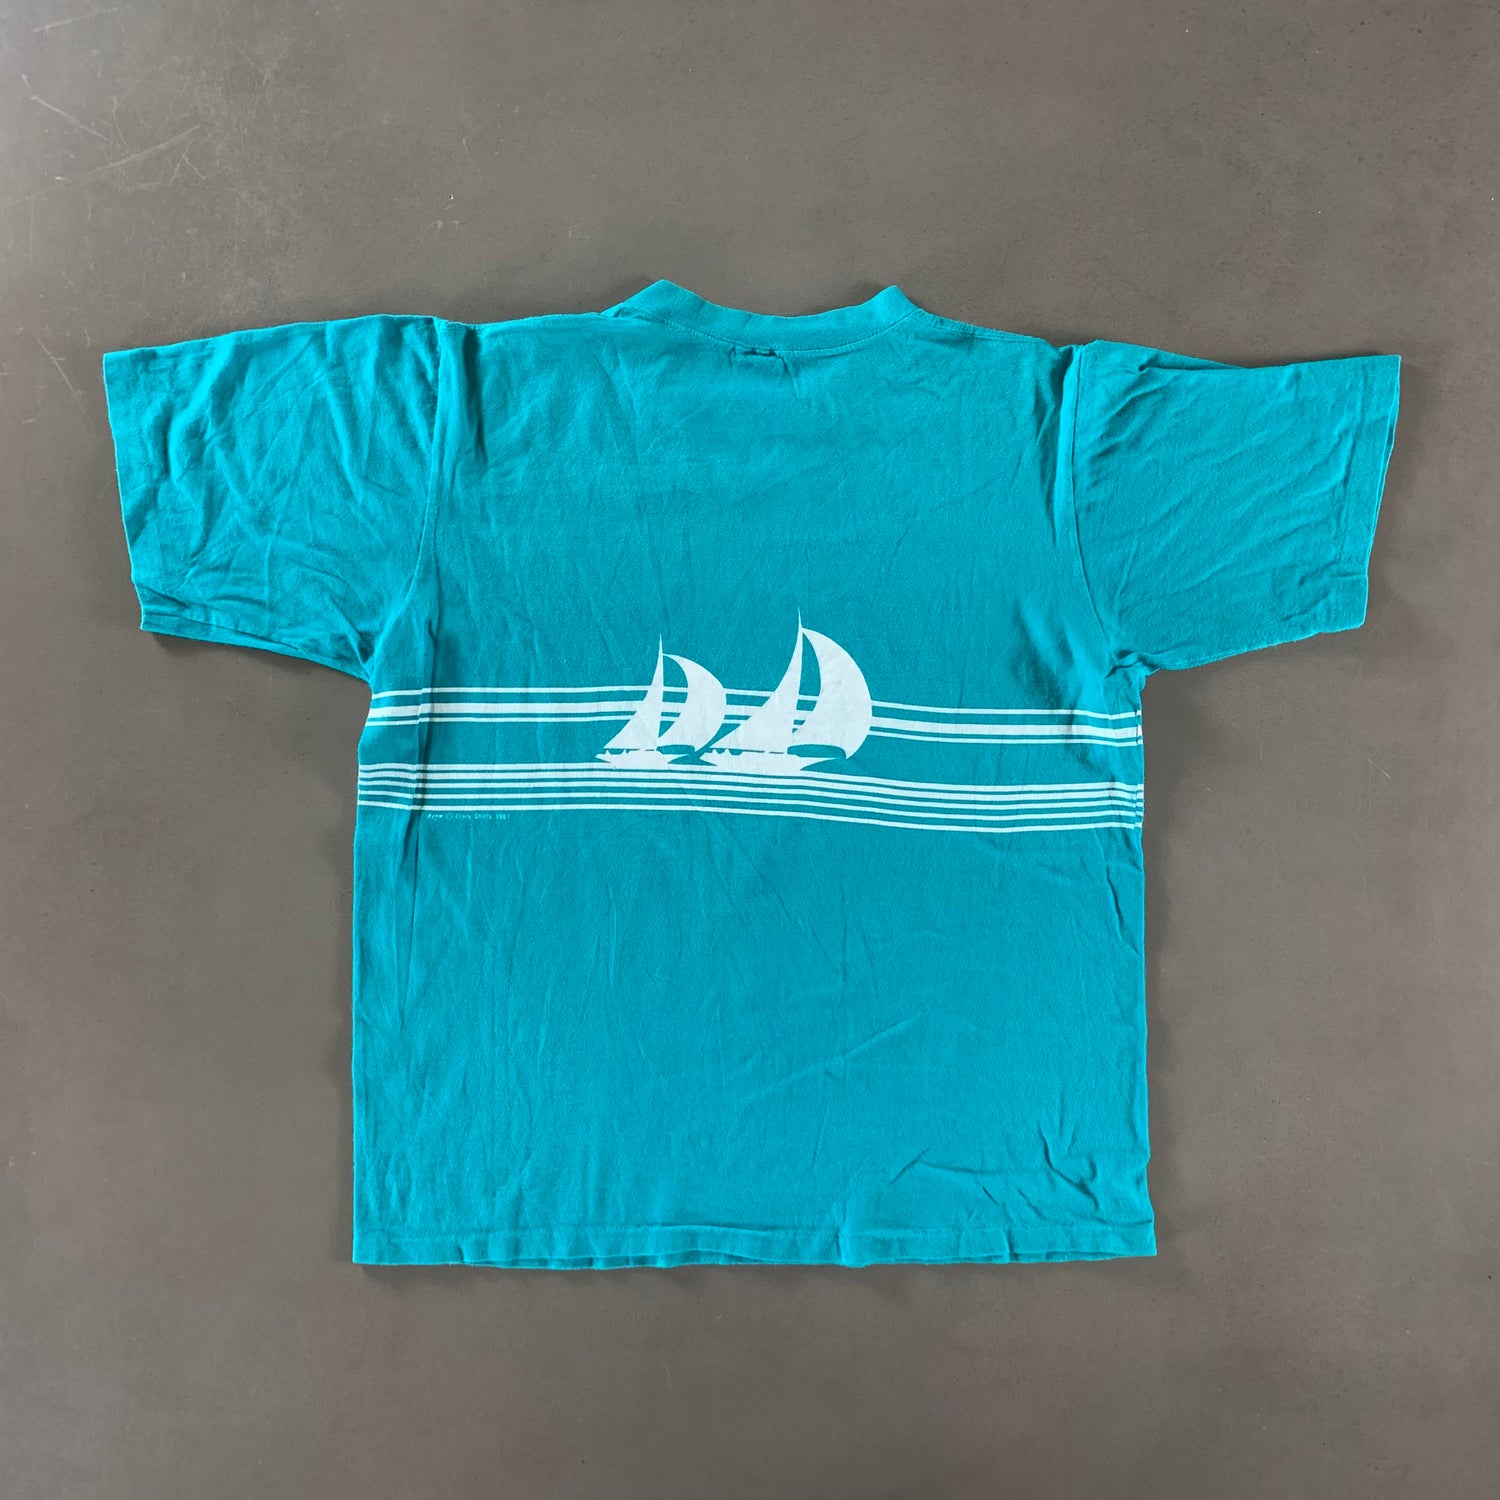 Vintage 1981 Hawaii T-shirt size Large